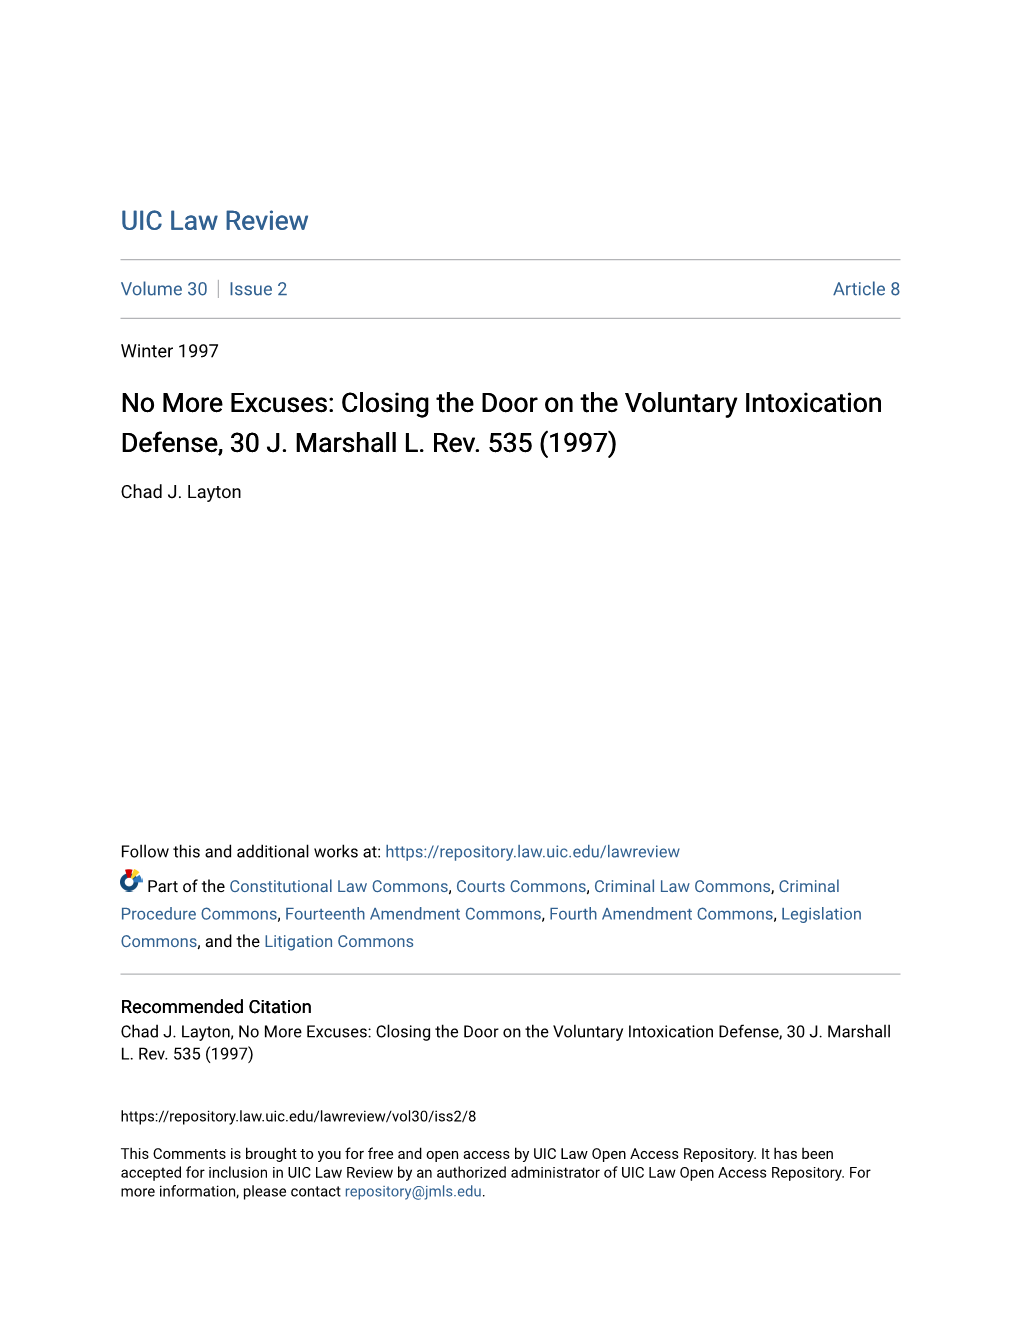 Closing the Door on the Voluntary Intoxication Defense, 30 J. Marshall L. Rev. 535 (1997)